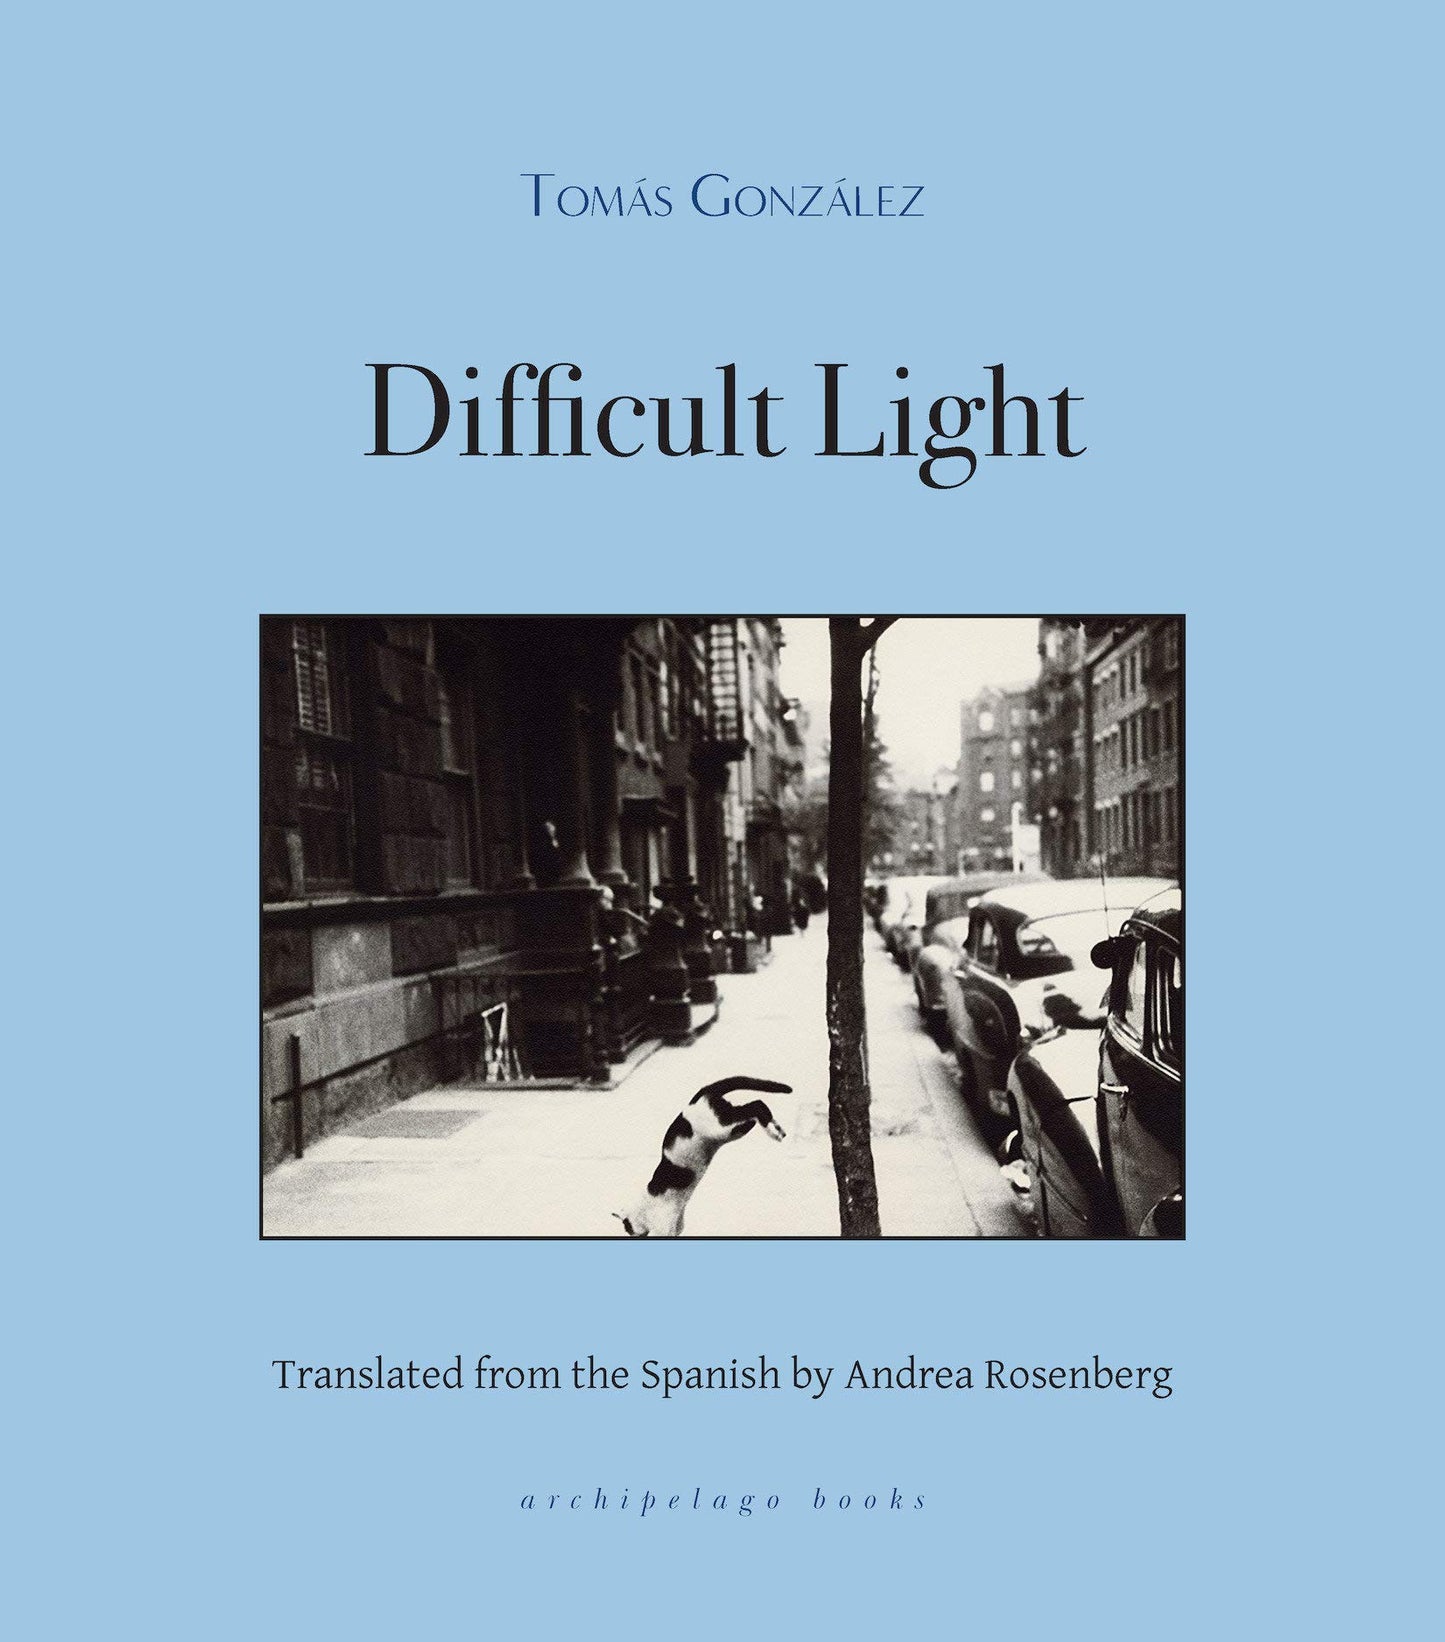 Difficult Light, by Tomás González